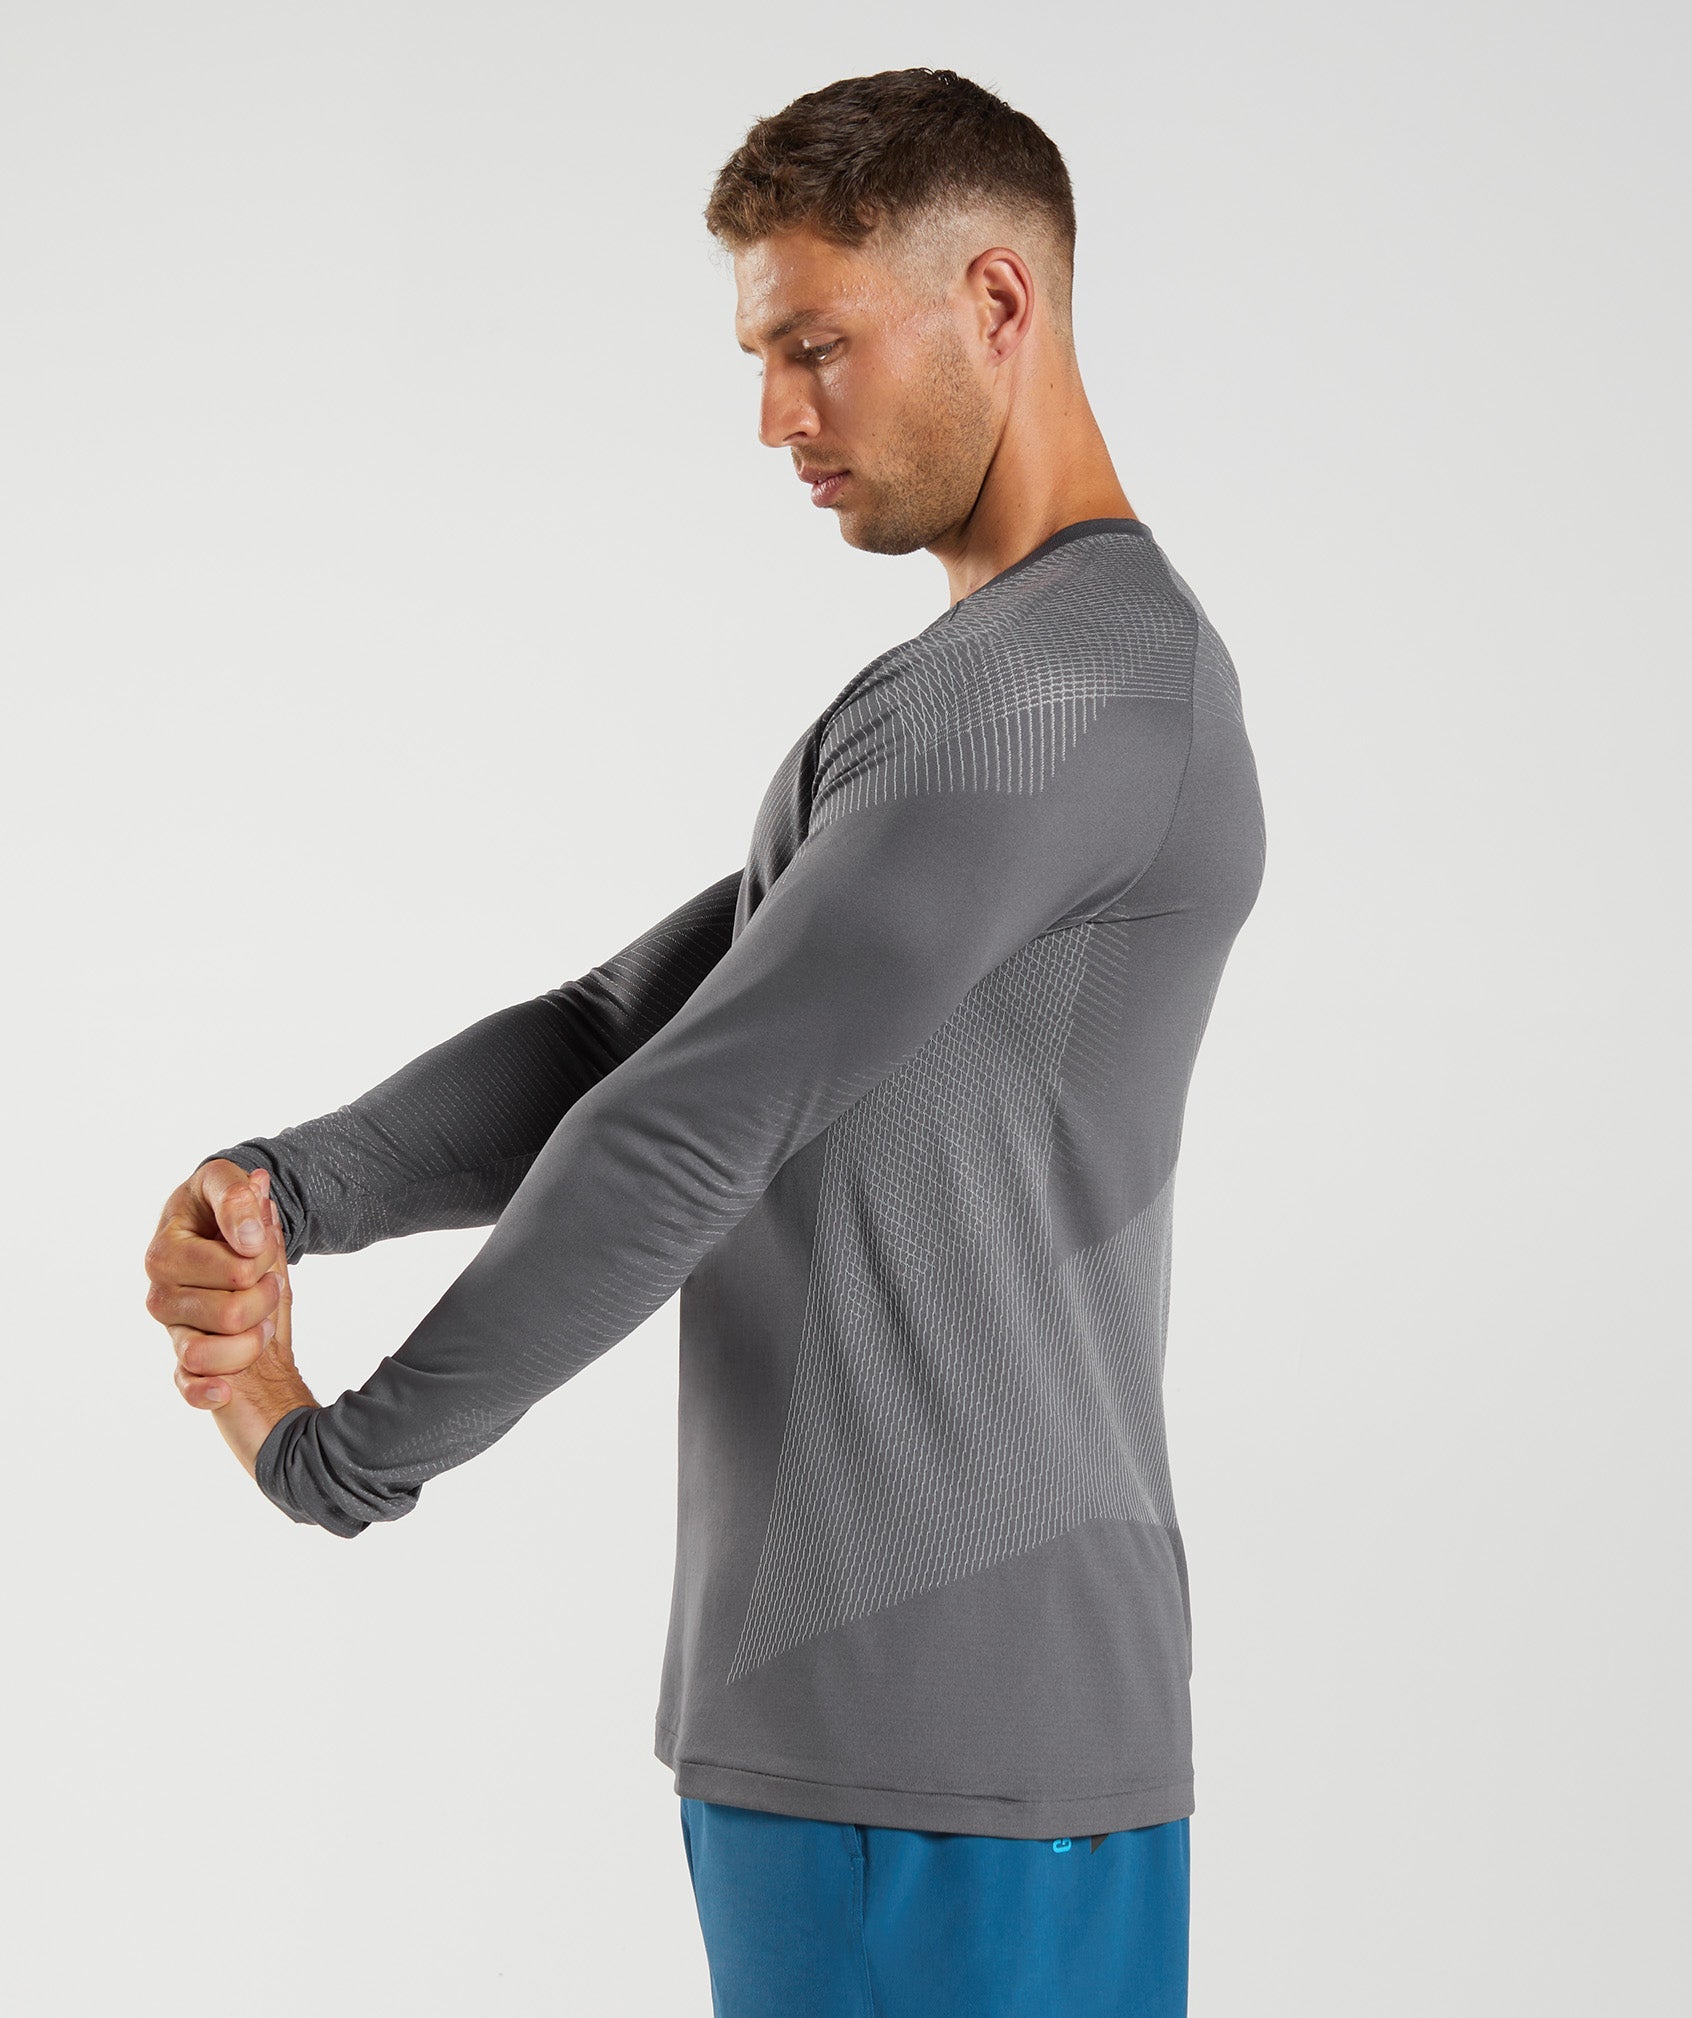 Apex Seamless Long Sleeve T-Shirt in Silhouette Grey/Smokey Grey - view 3